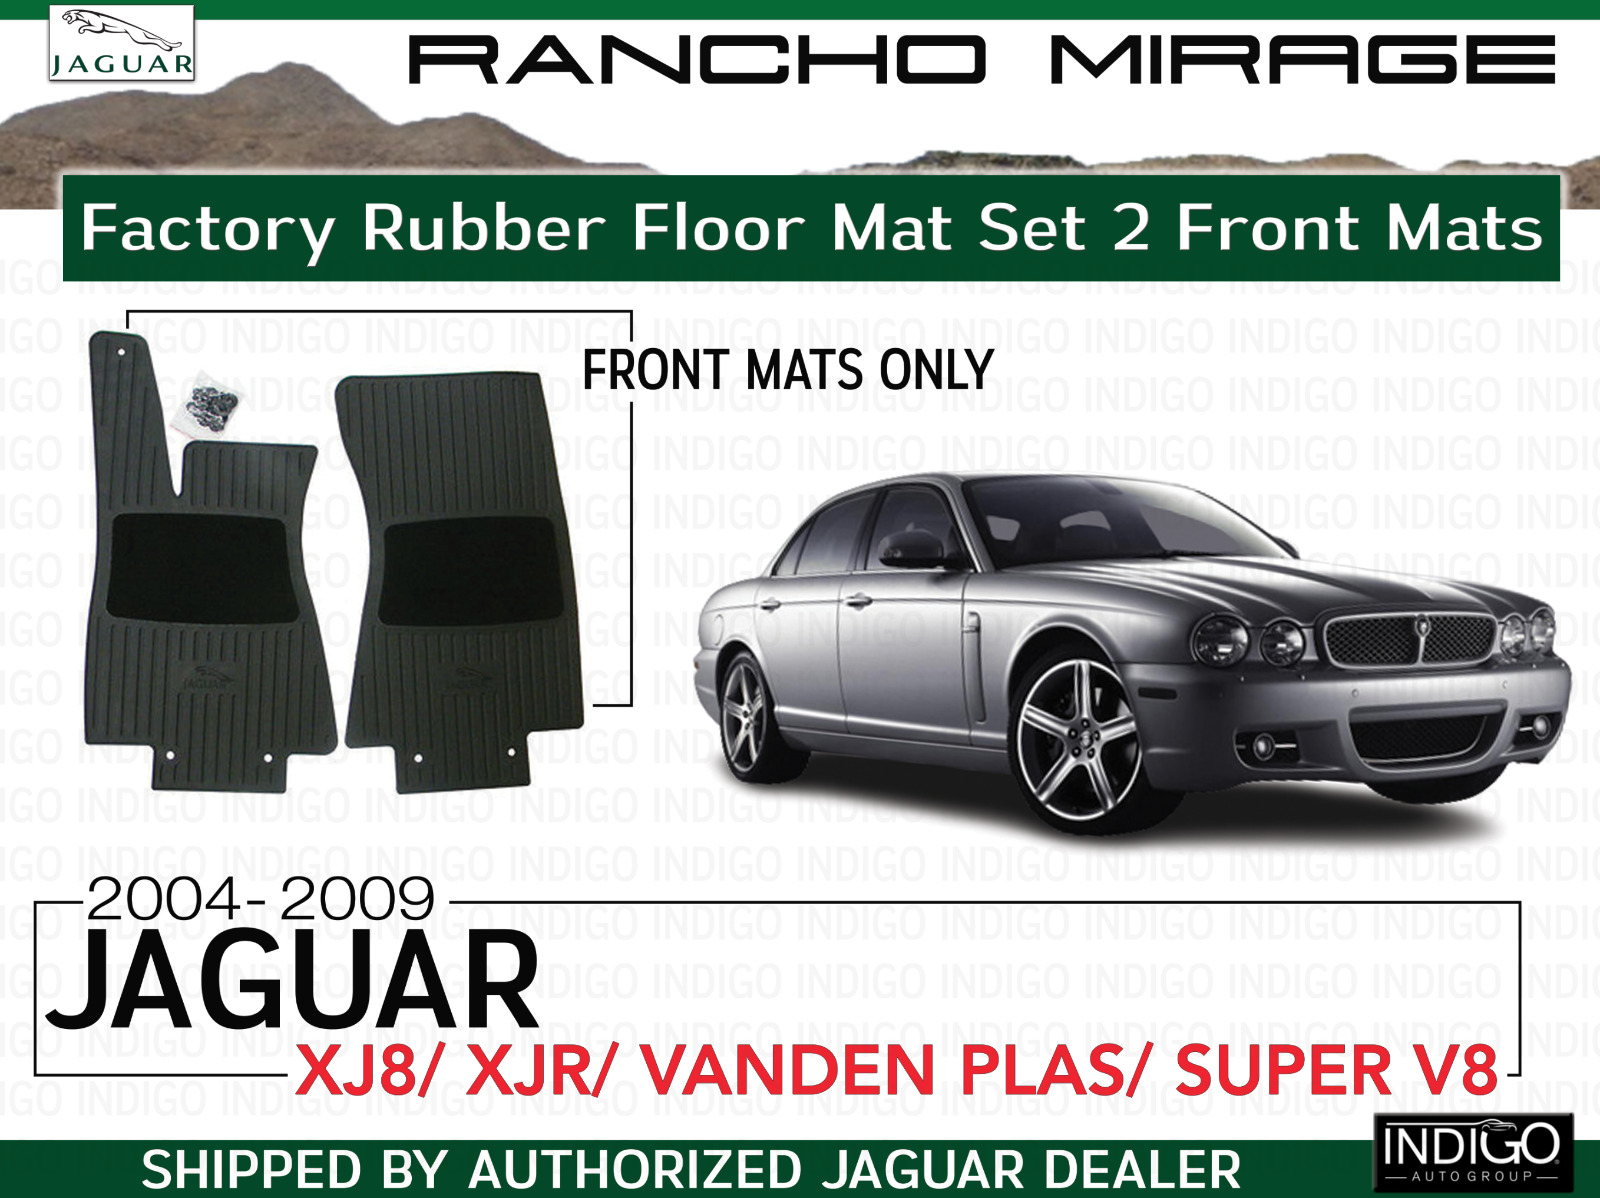 Jaguar OEM XJ8 XJR VDP Factory Rubber Floor Mat Set 2 Front Mats 04-09 C2C7368